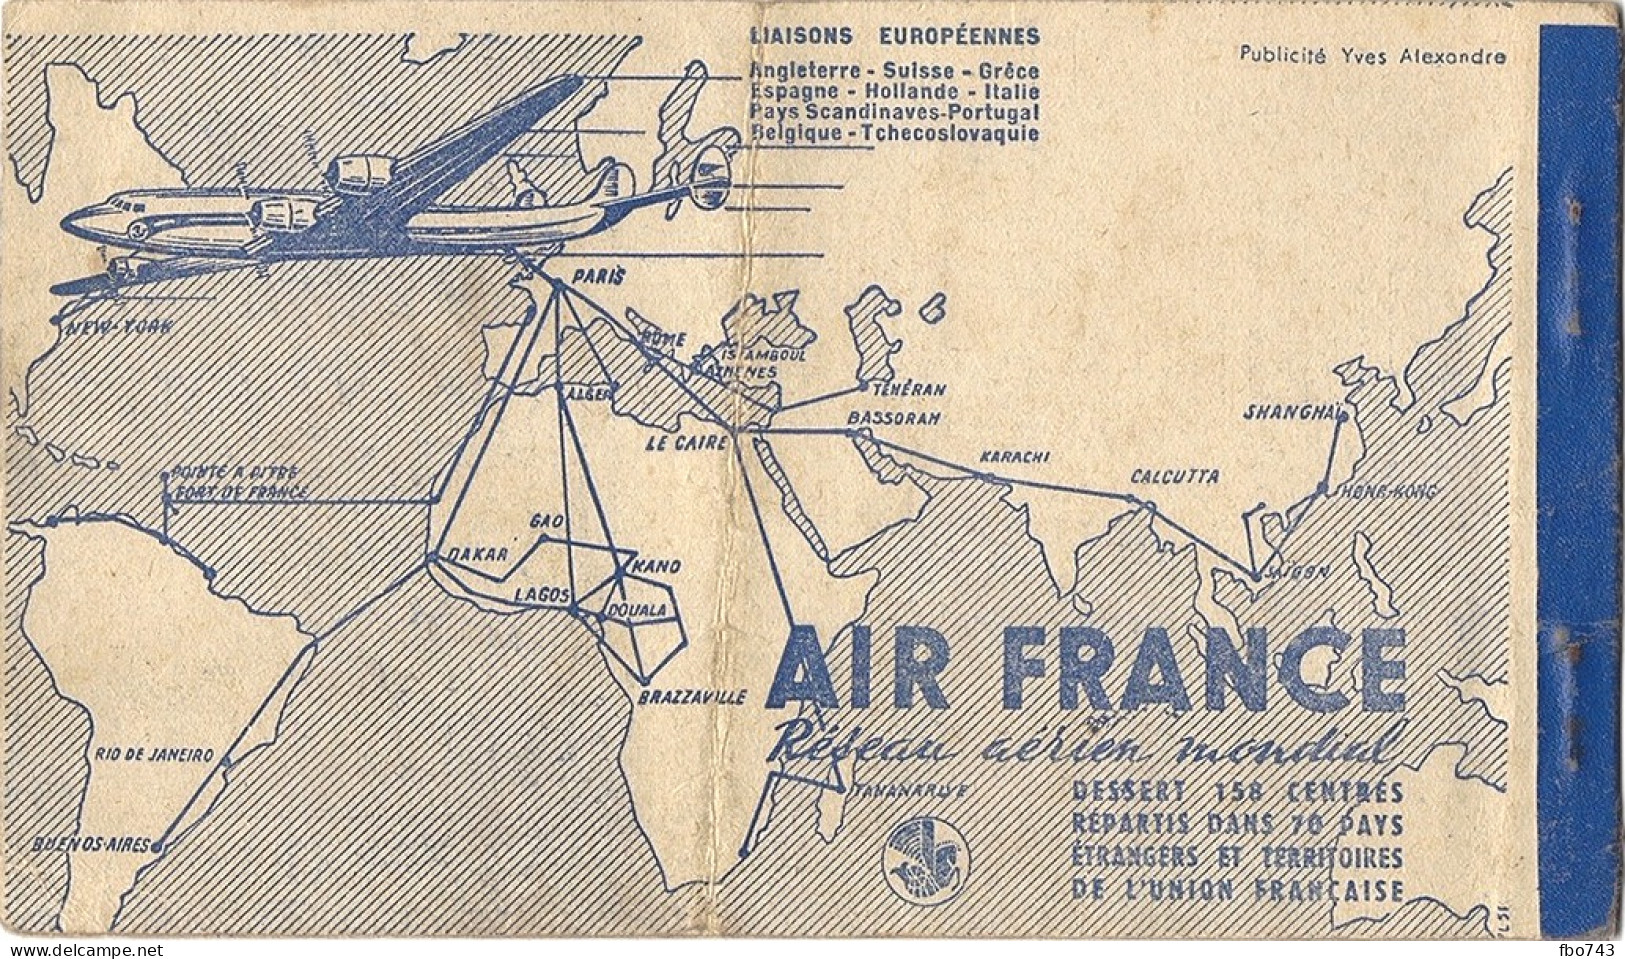 1949 Ticket Air France Marseille-Bastia - Europe